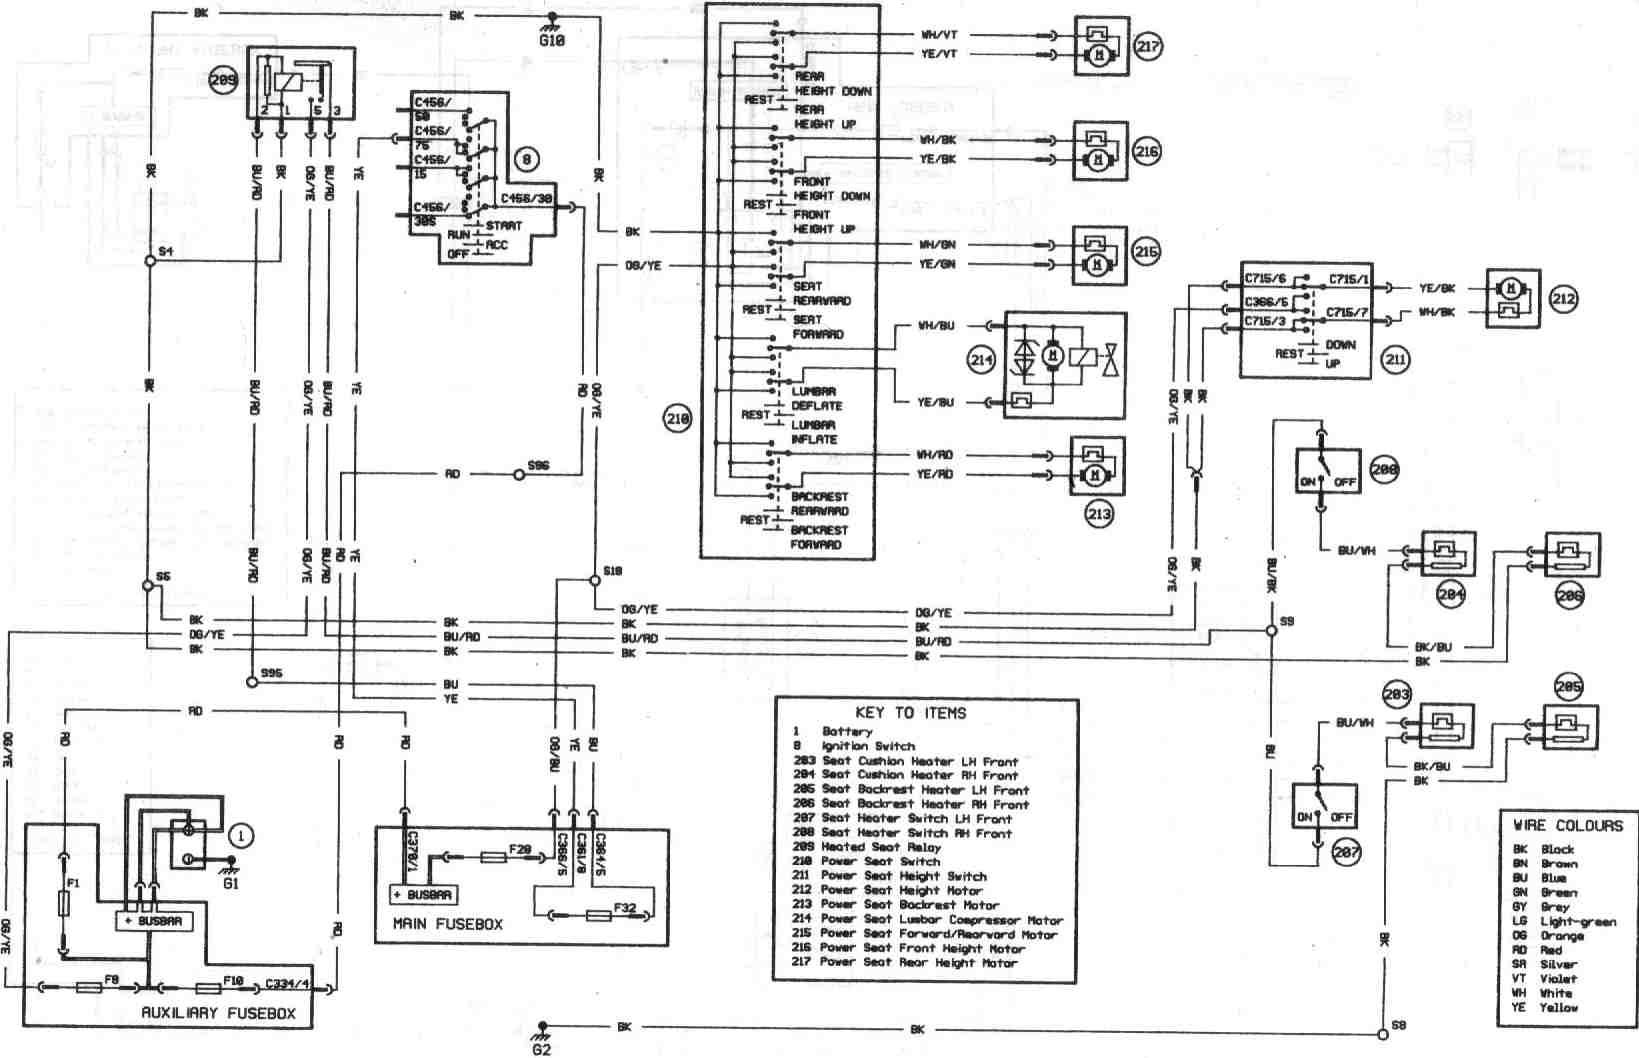 Ford mondeo mk2 wiring diagram #6